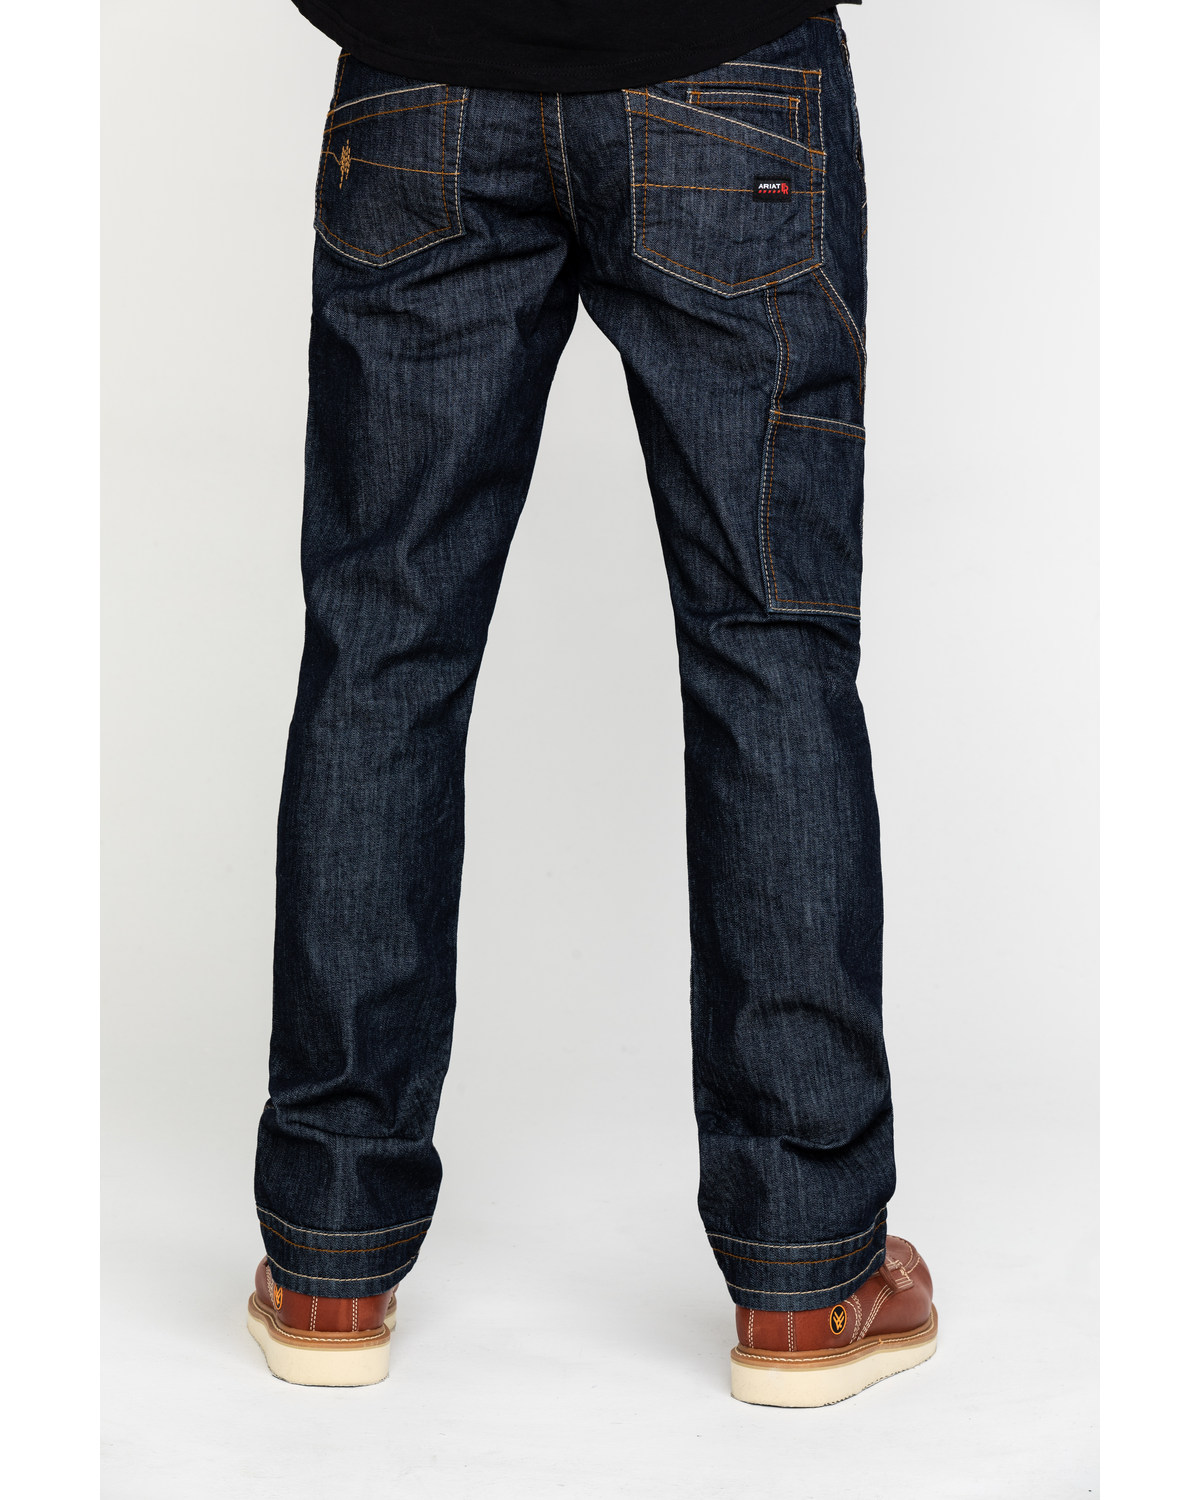 Buy > ariat m4 jeans fr > in stock